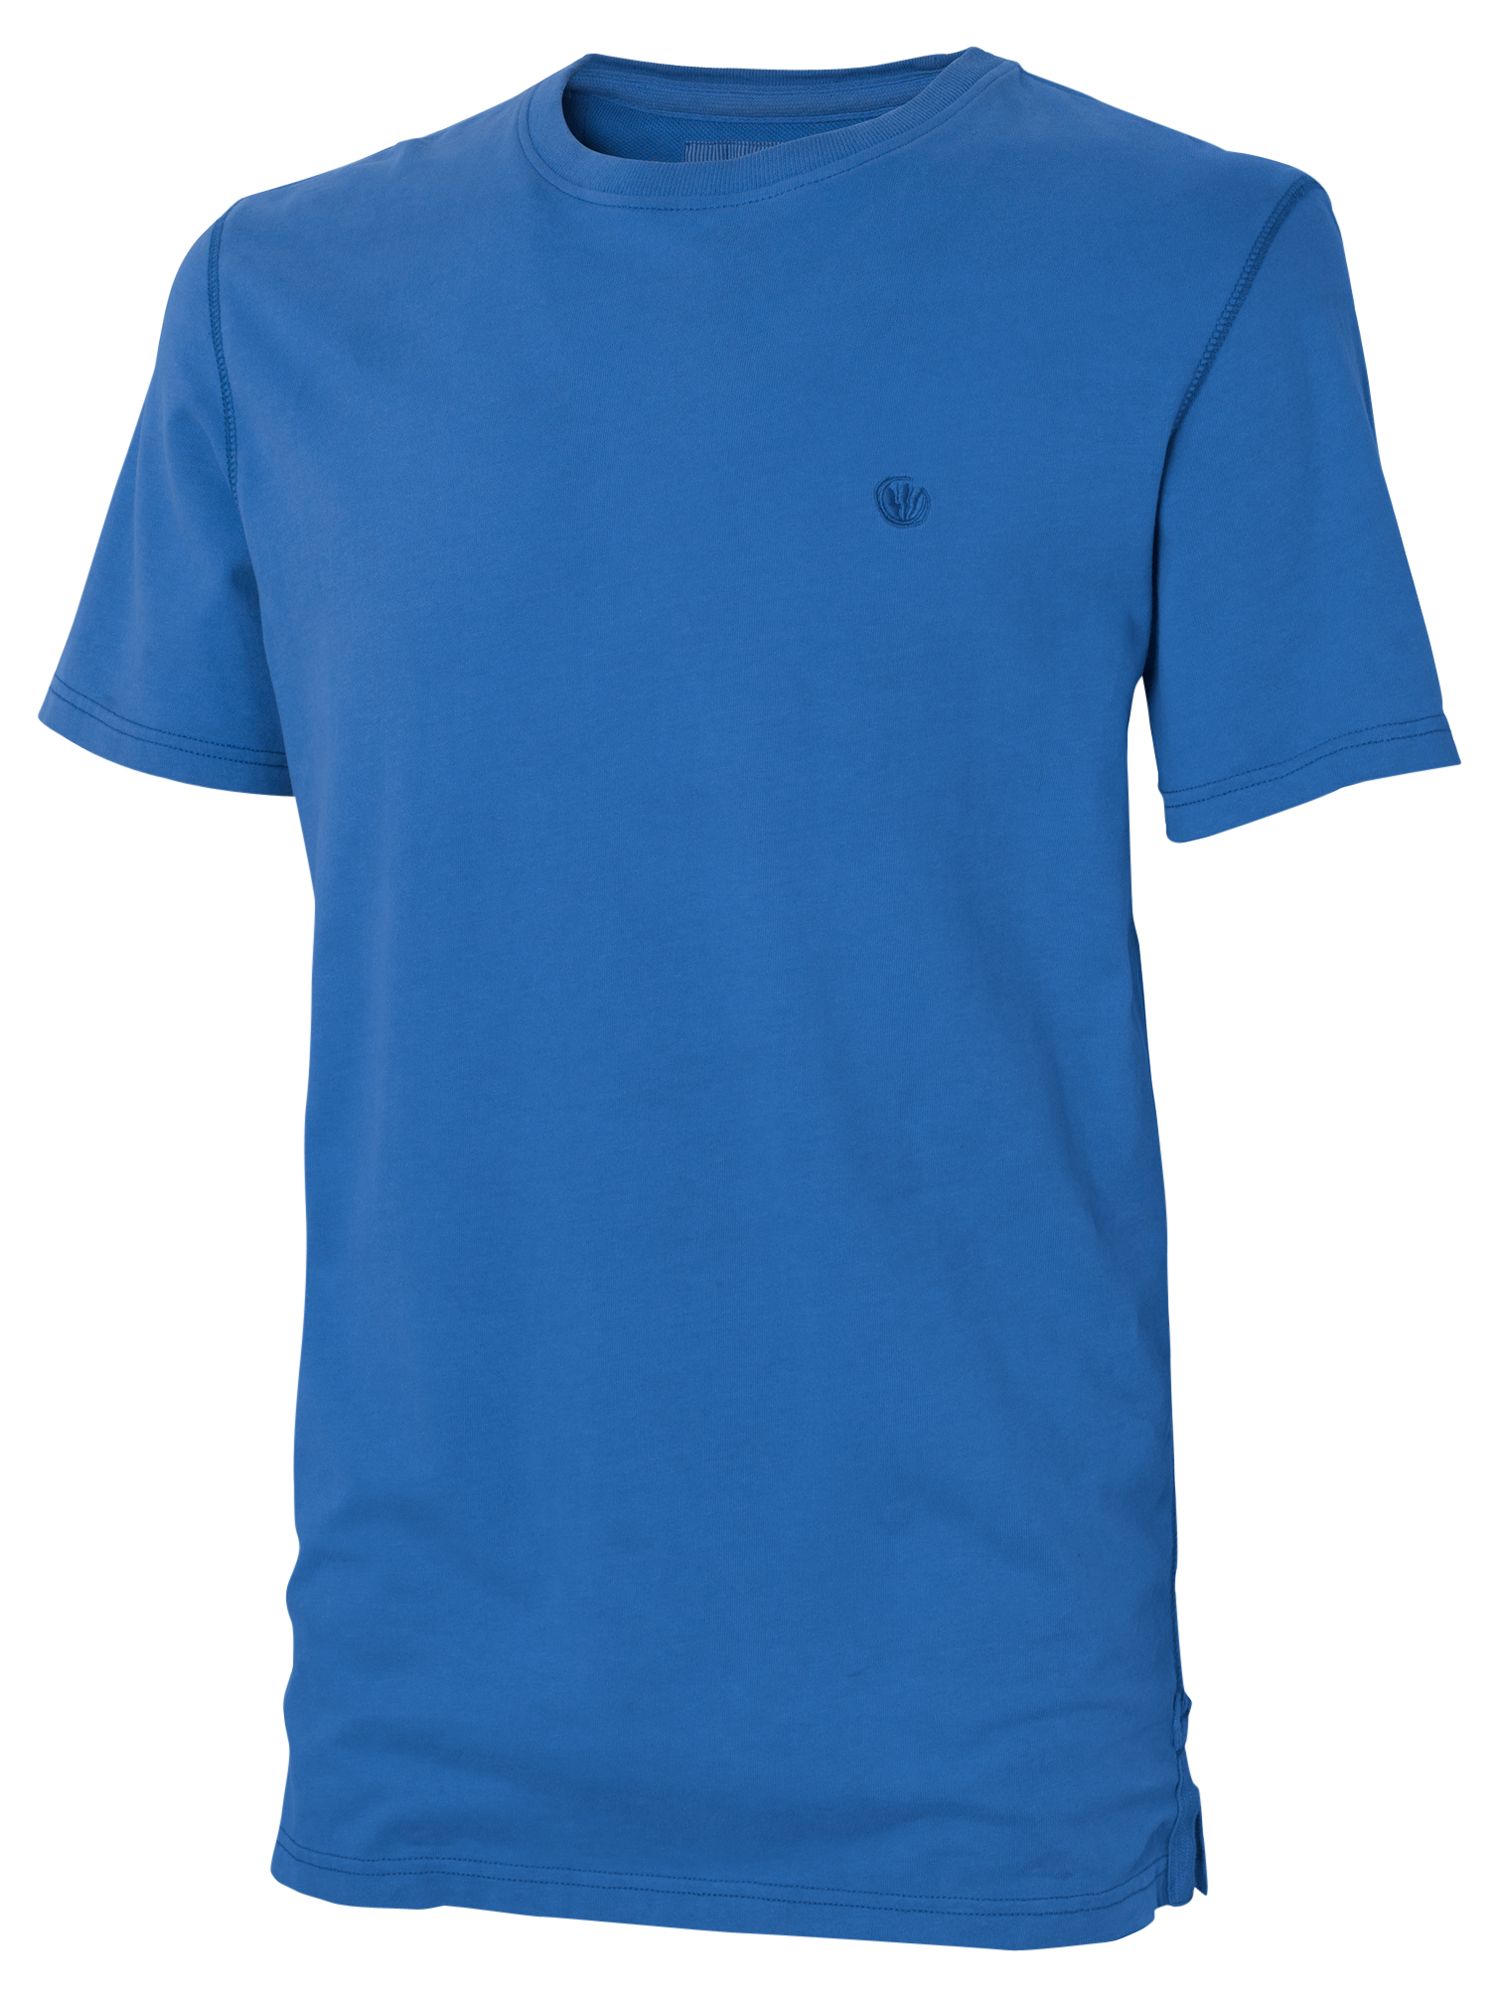 Fat Face Original Crew Neck T-Shirt, Turquoise